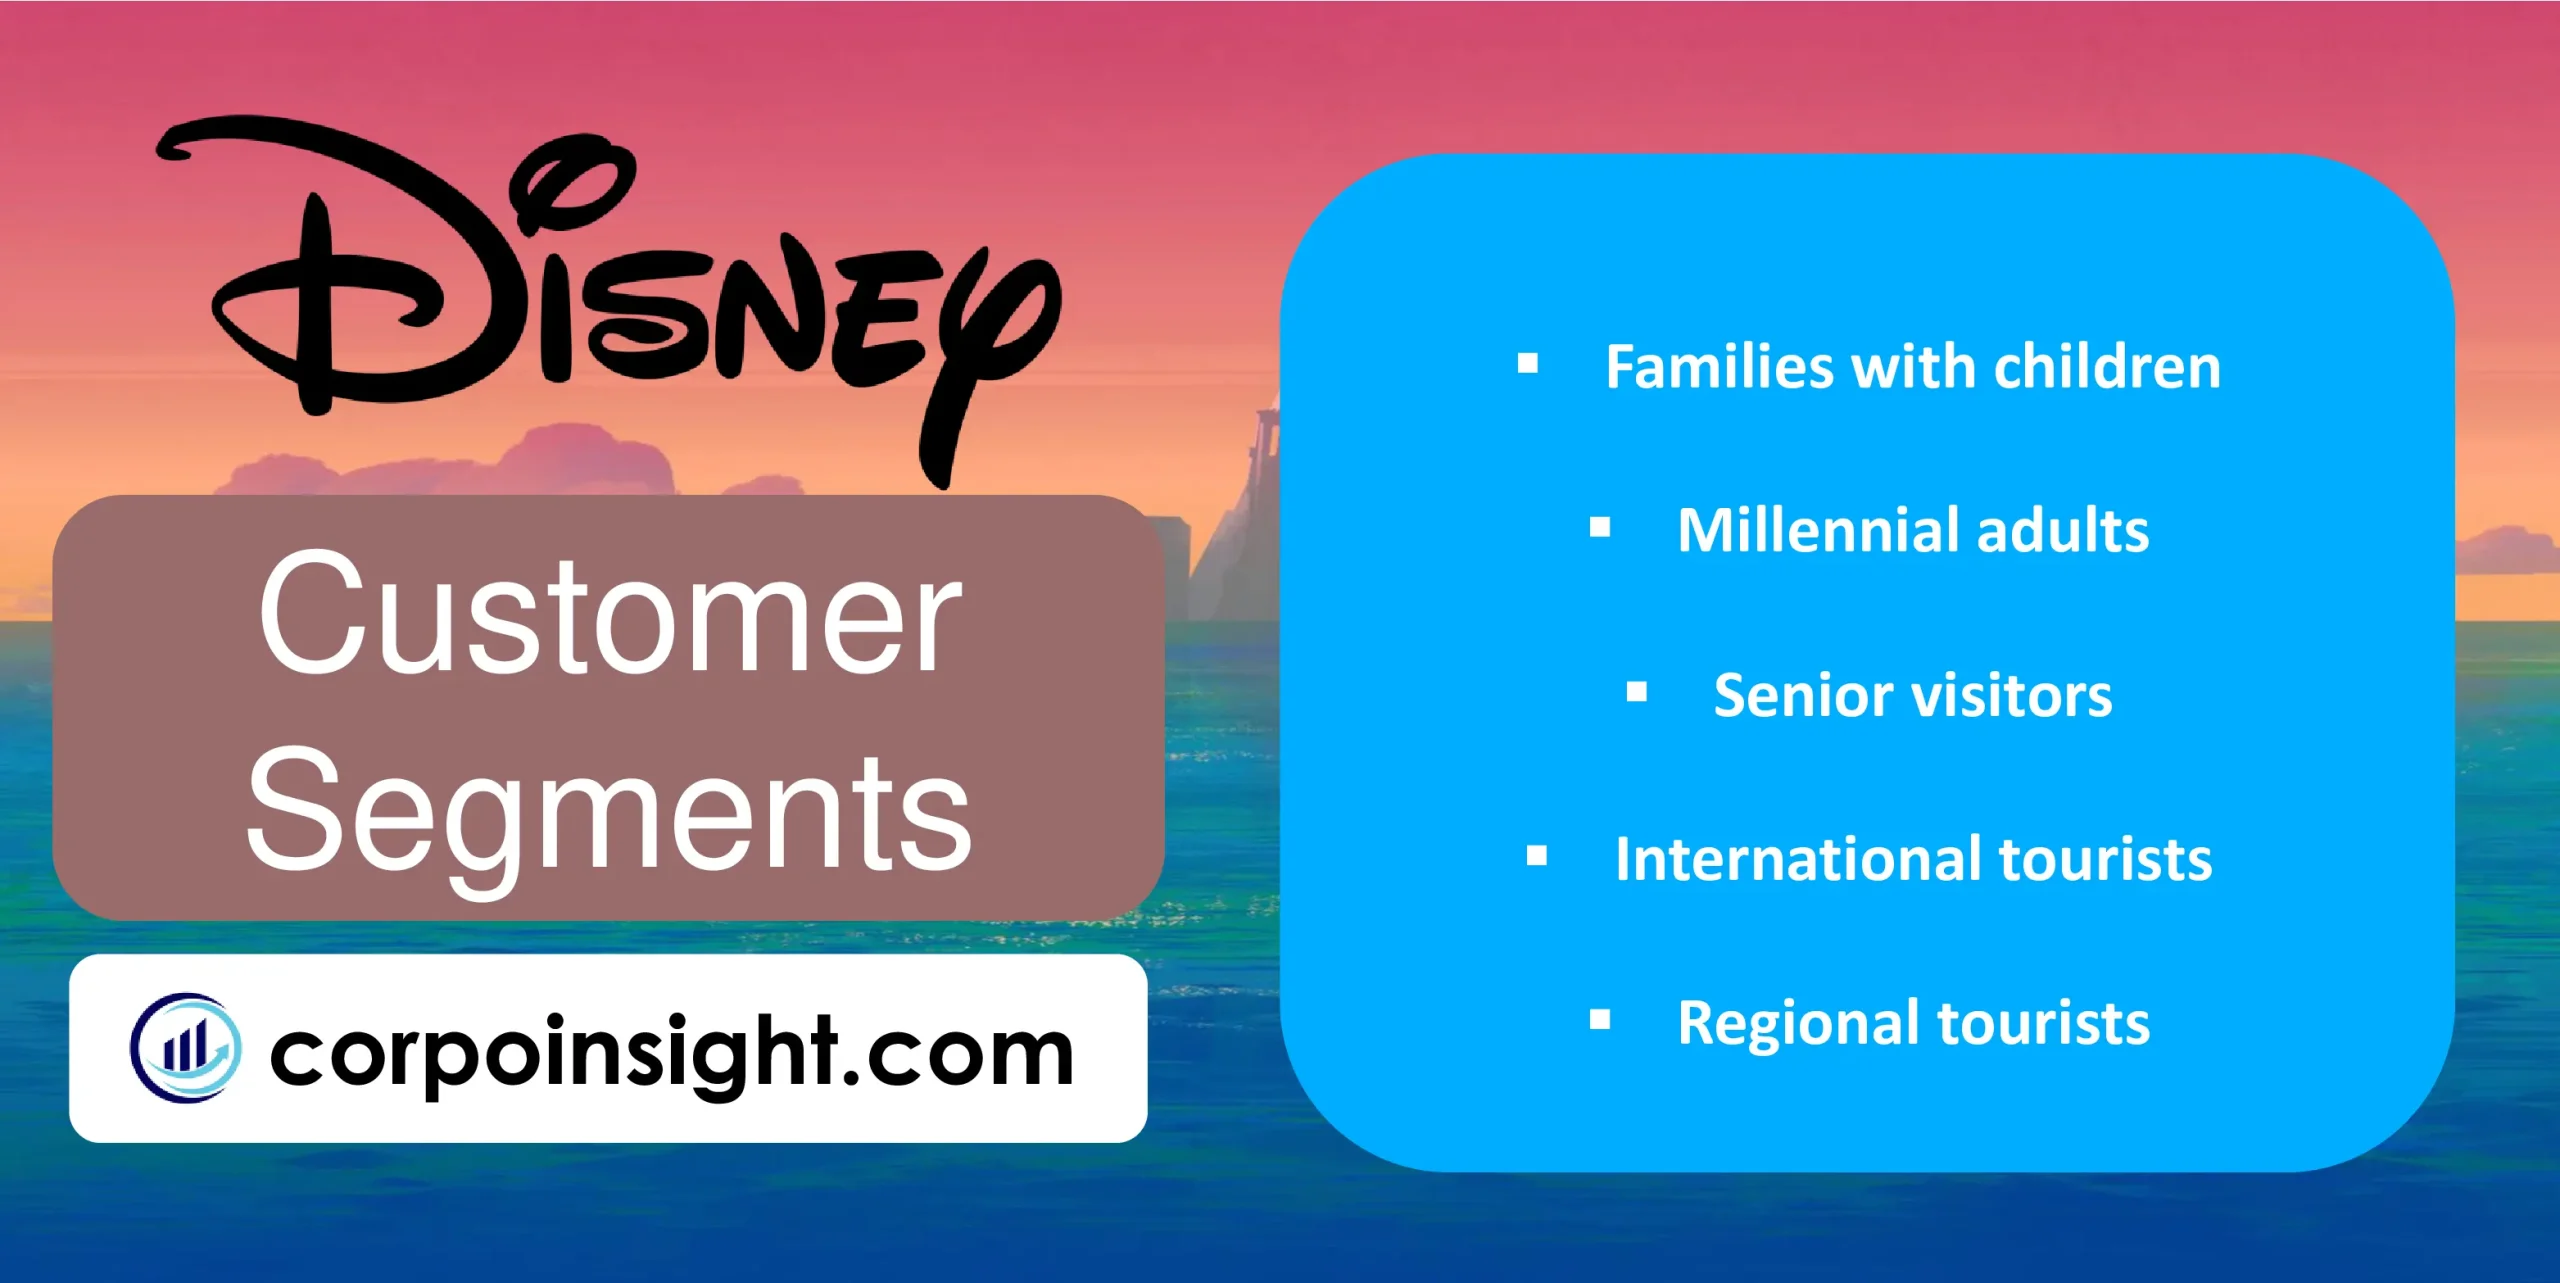 Customer Segments of Disney